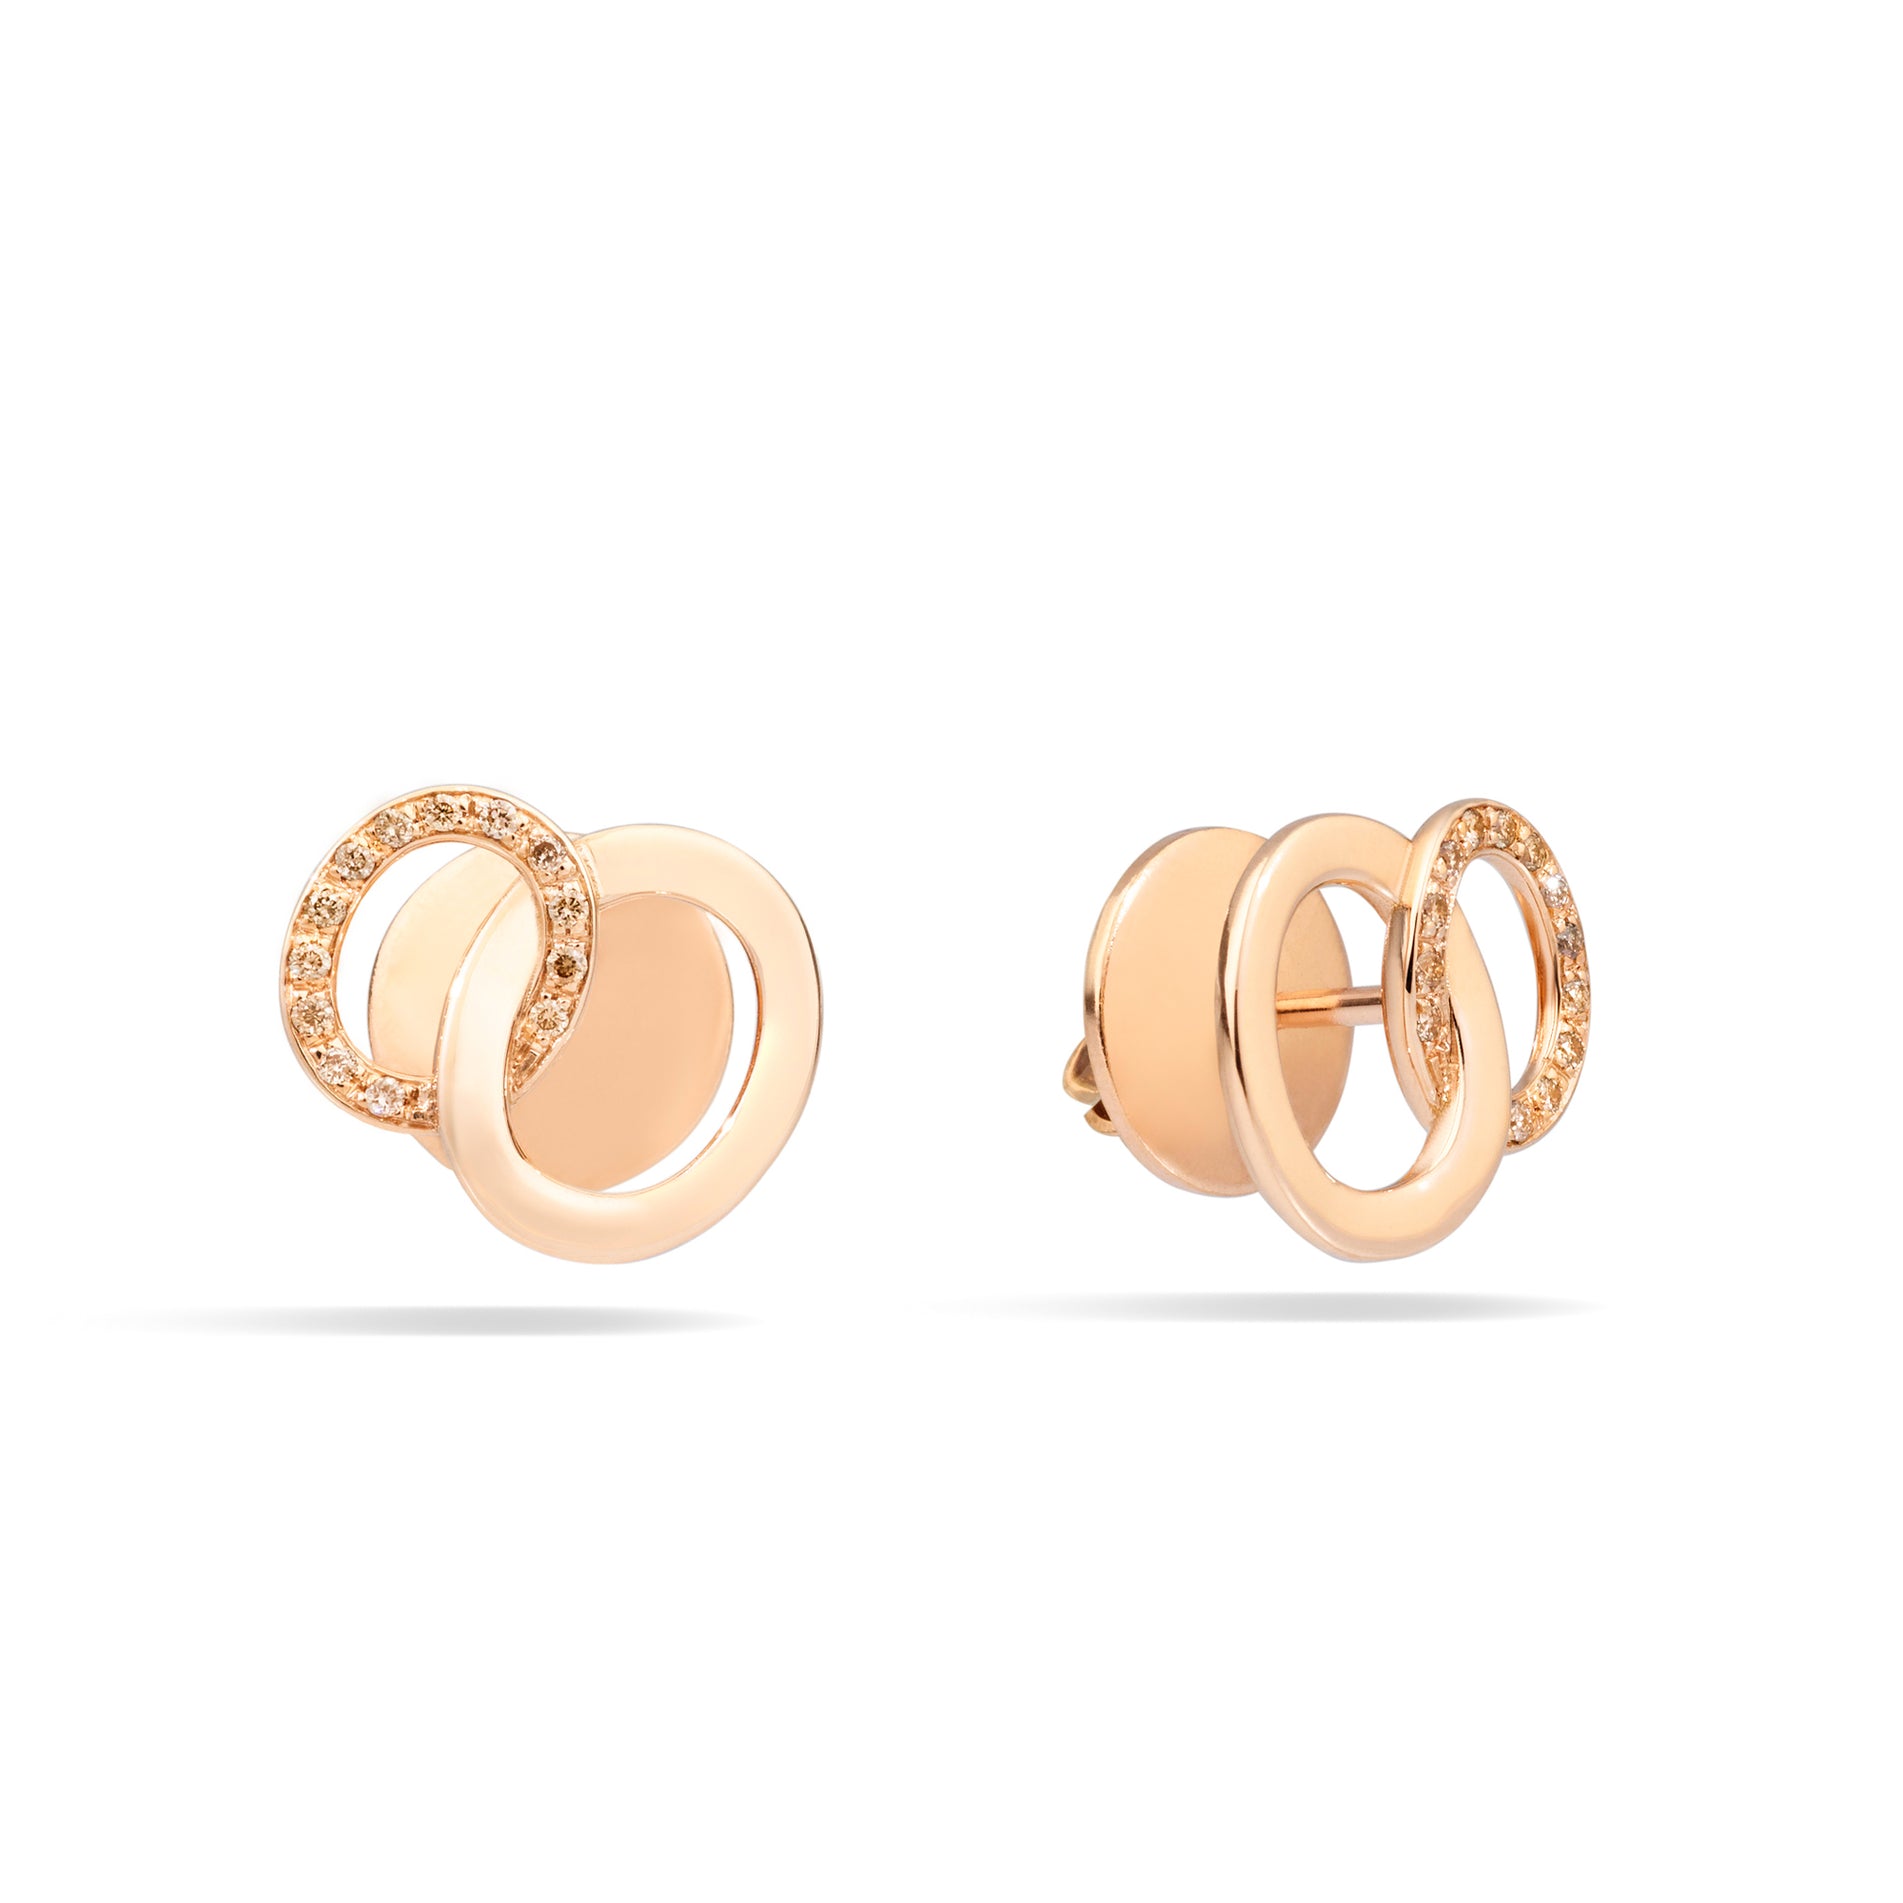 Brera Earrings in 18k Rose Gold with Brown Diamonds - Orsini Jewellers NZ